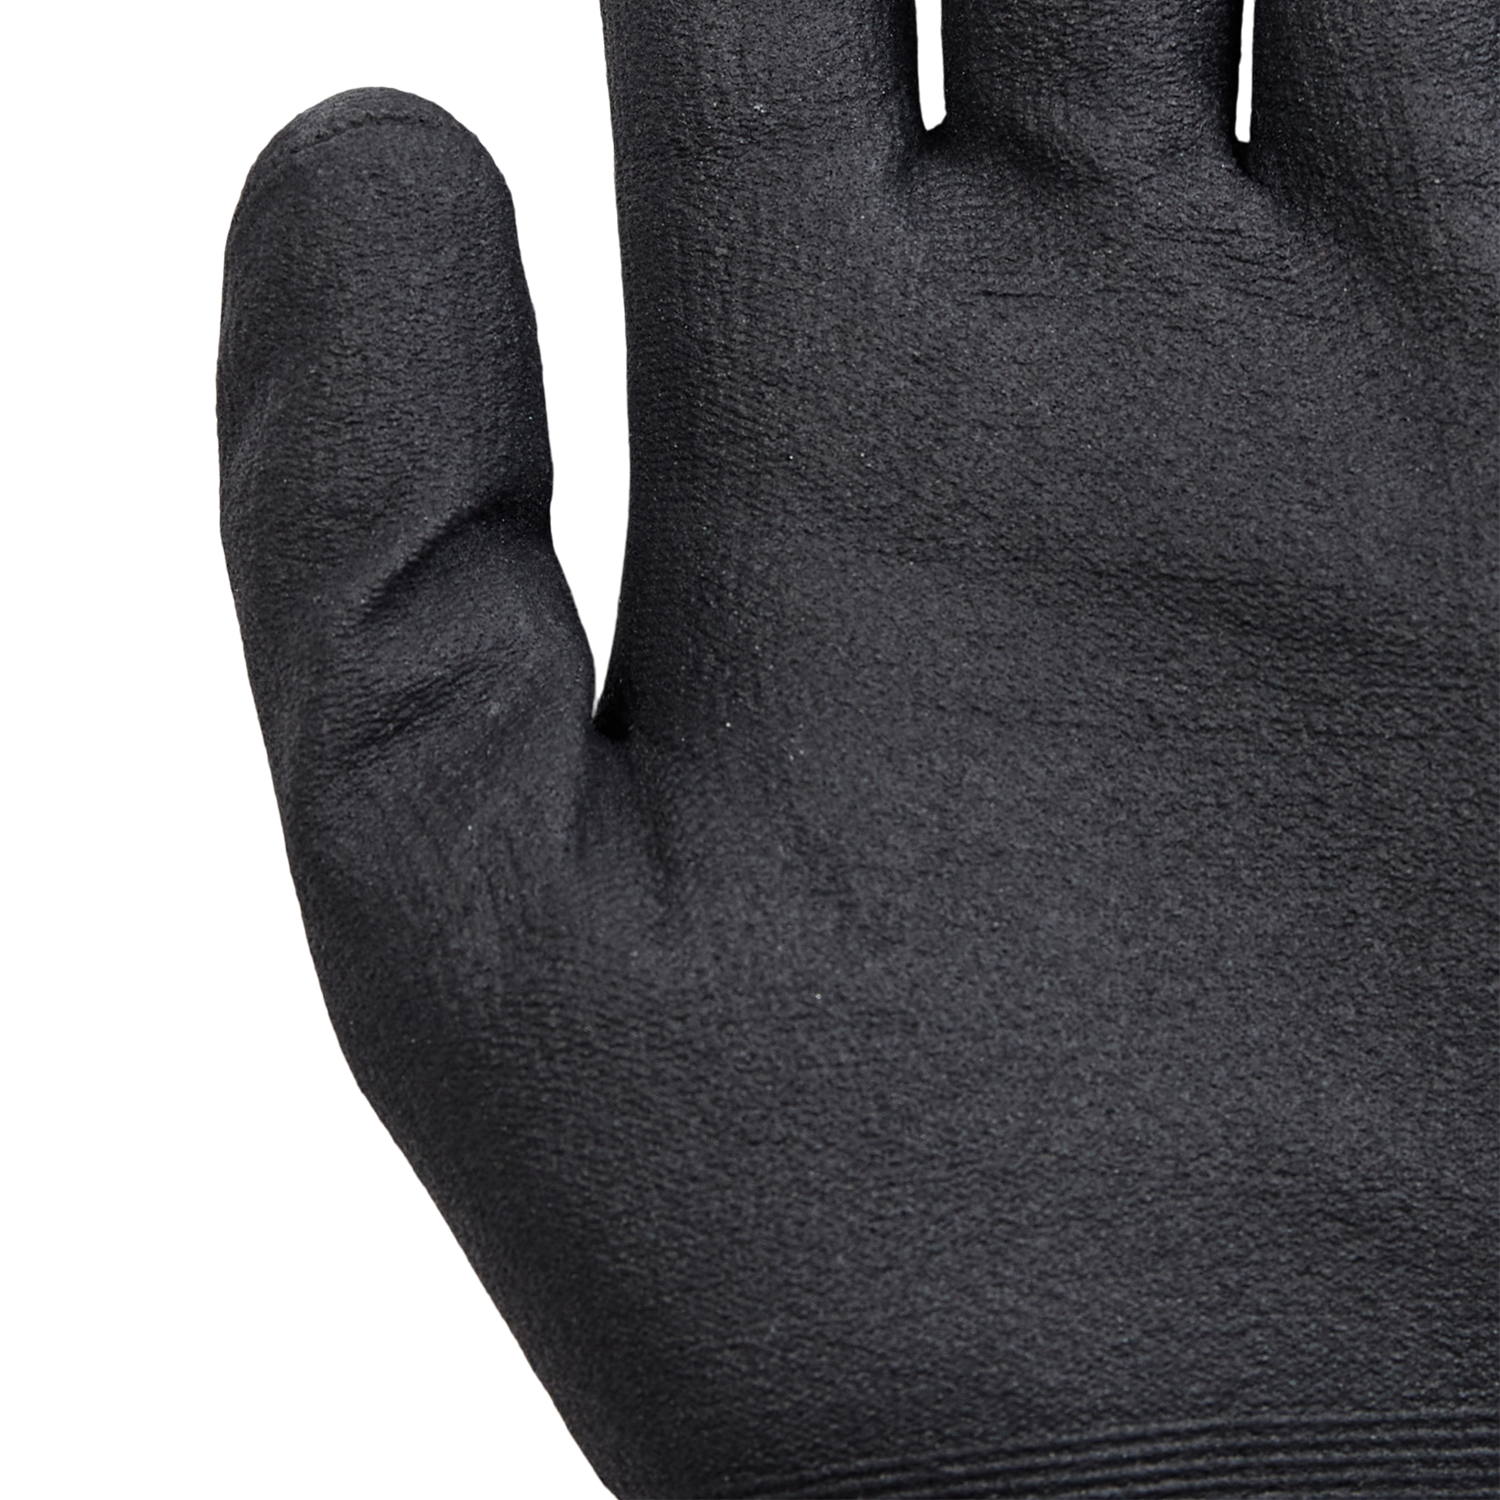 NORSE Flex Supreme assembly gloves size 9